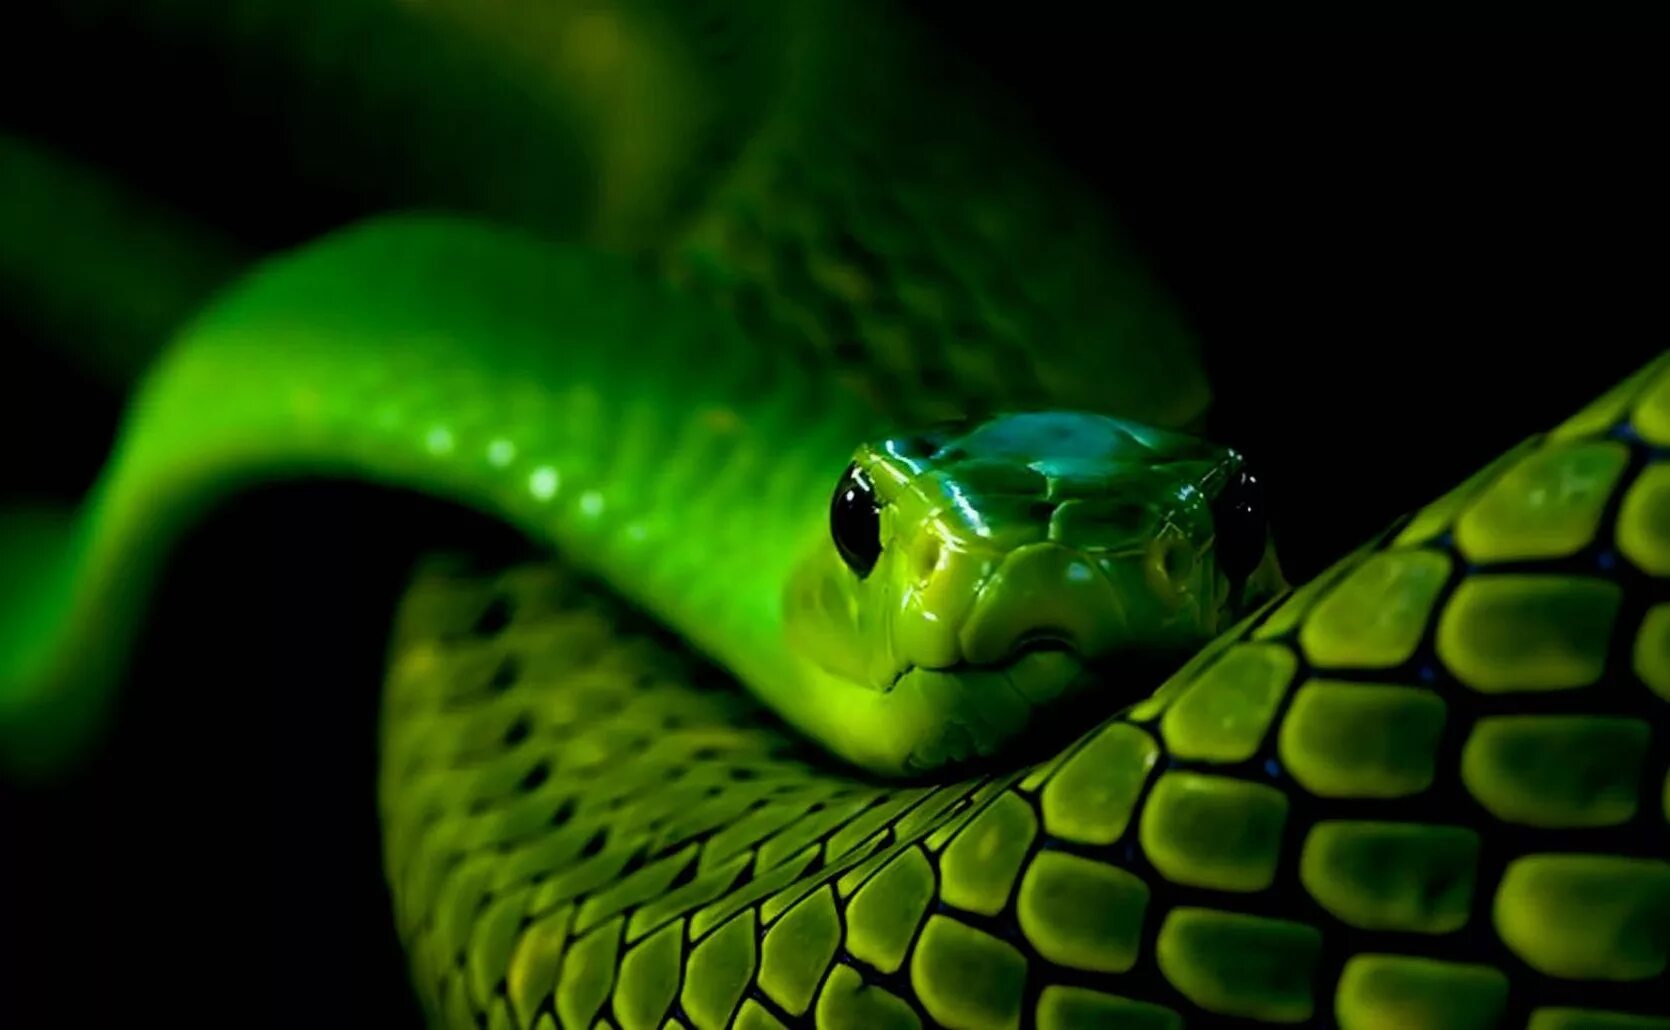 Картинка змея. Змея. Змейка. Зелёная змея / Green Snake [2019] Green Snake. Питон картинки.